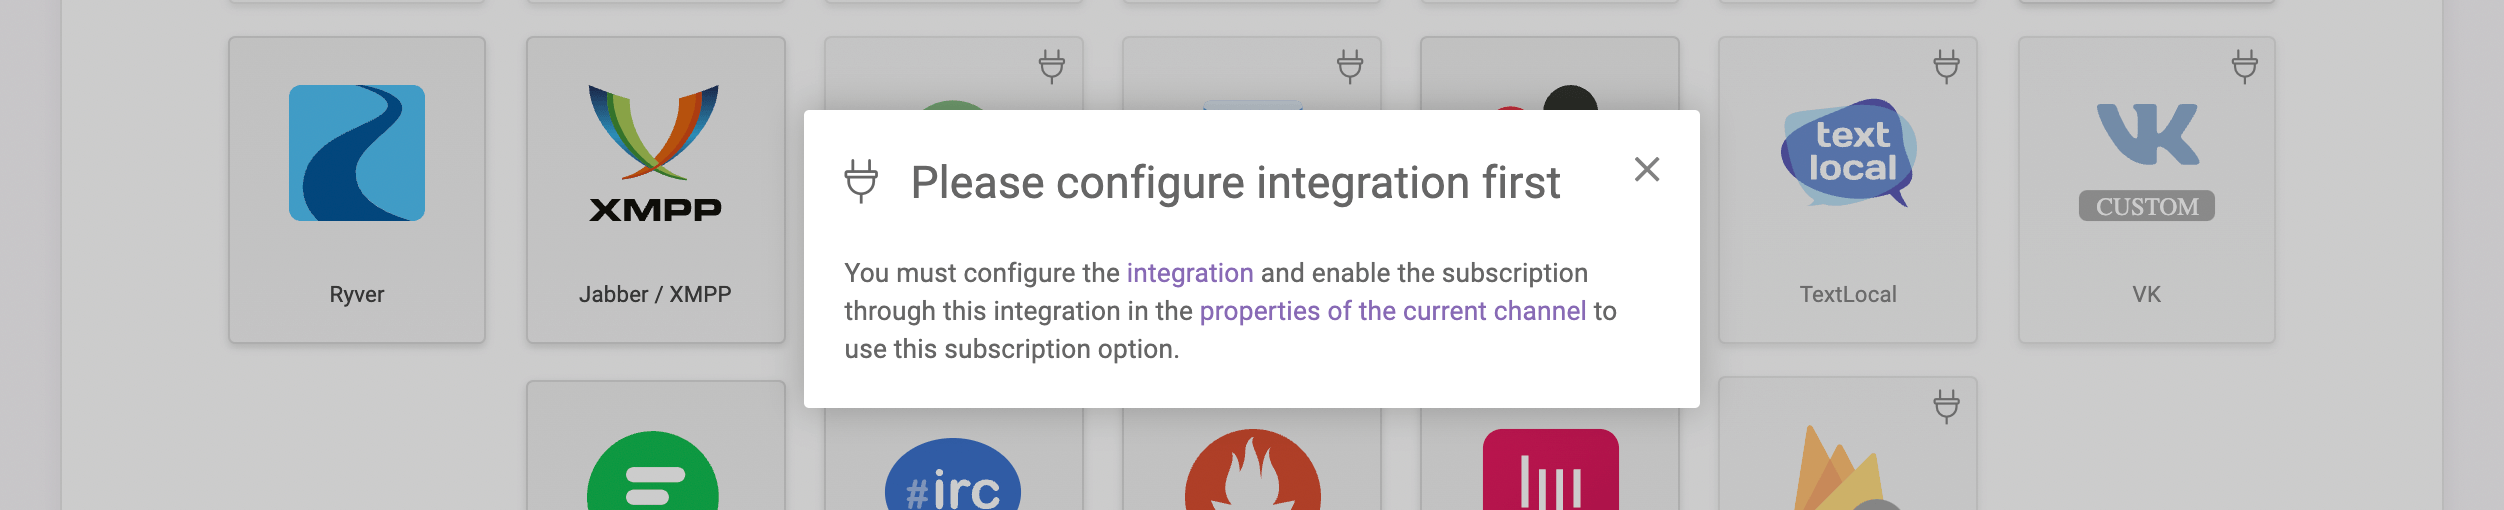 1 Setting up integration - Configure Integration message.png